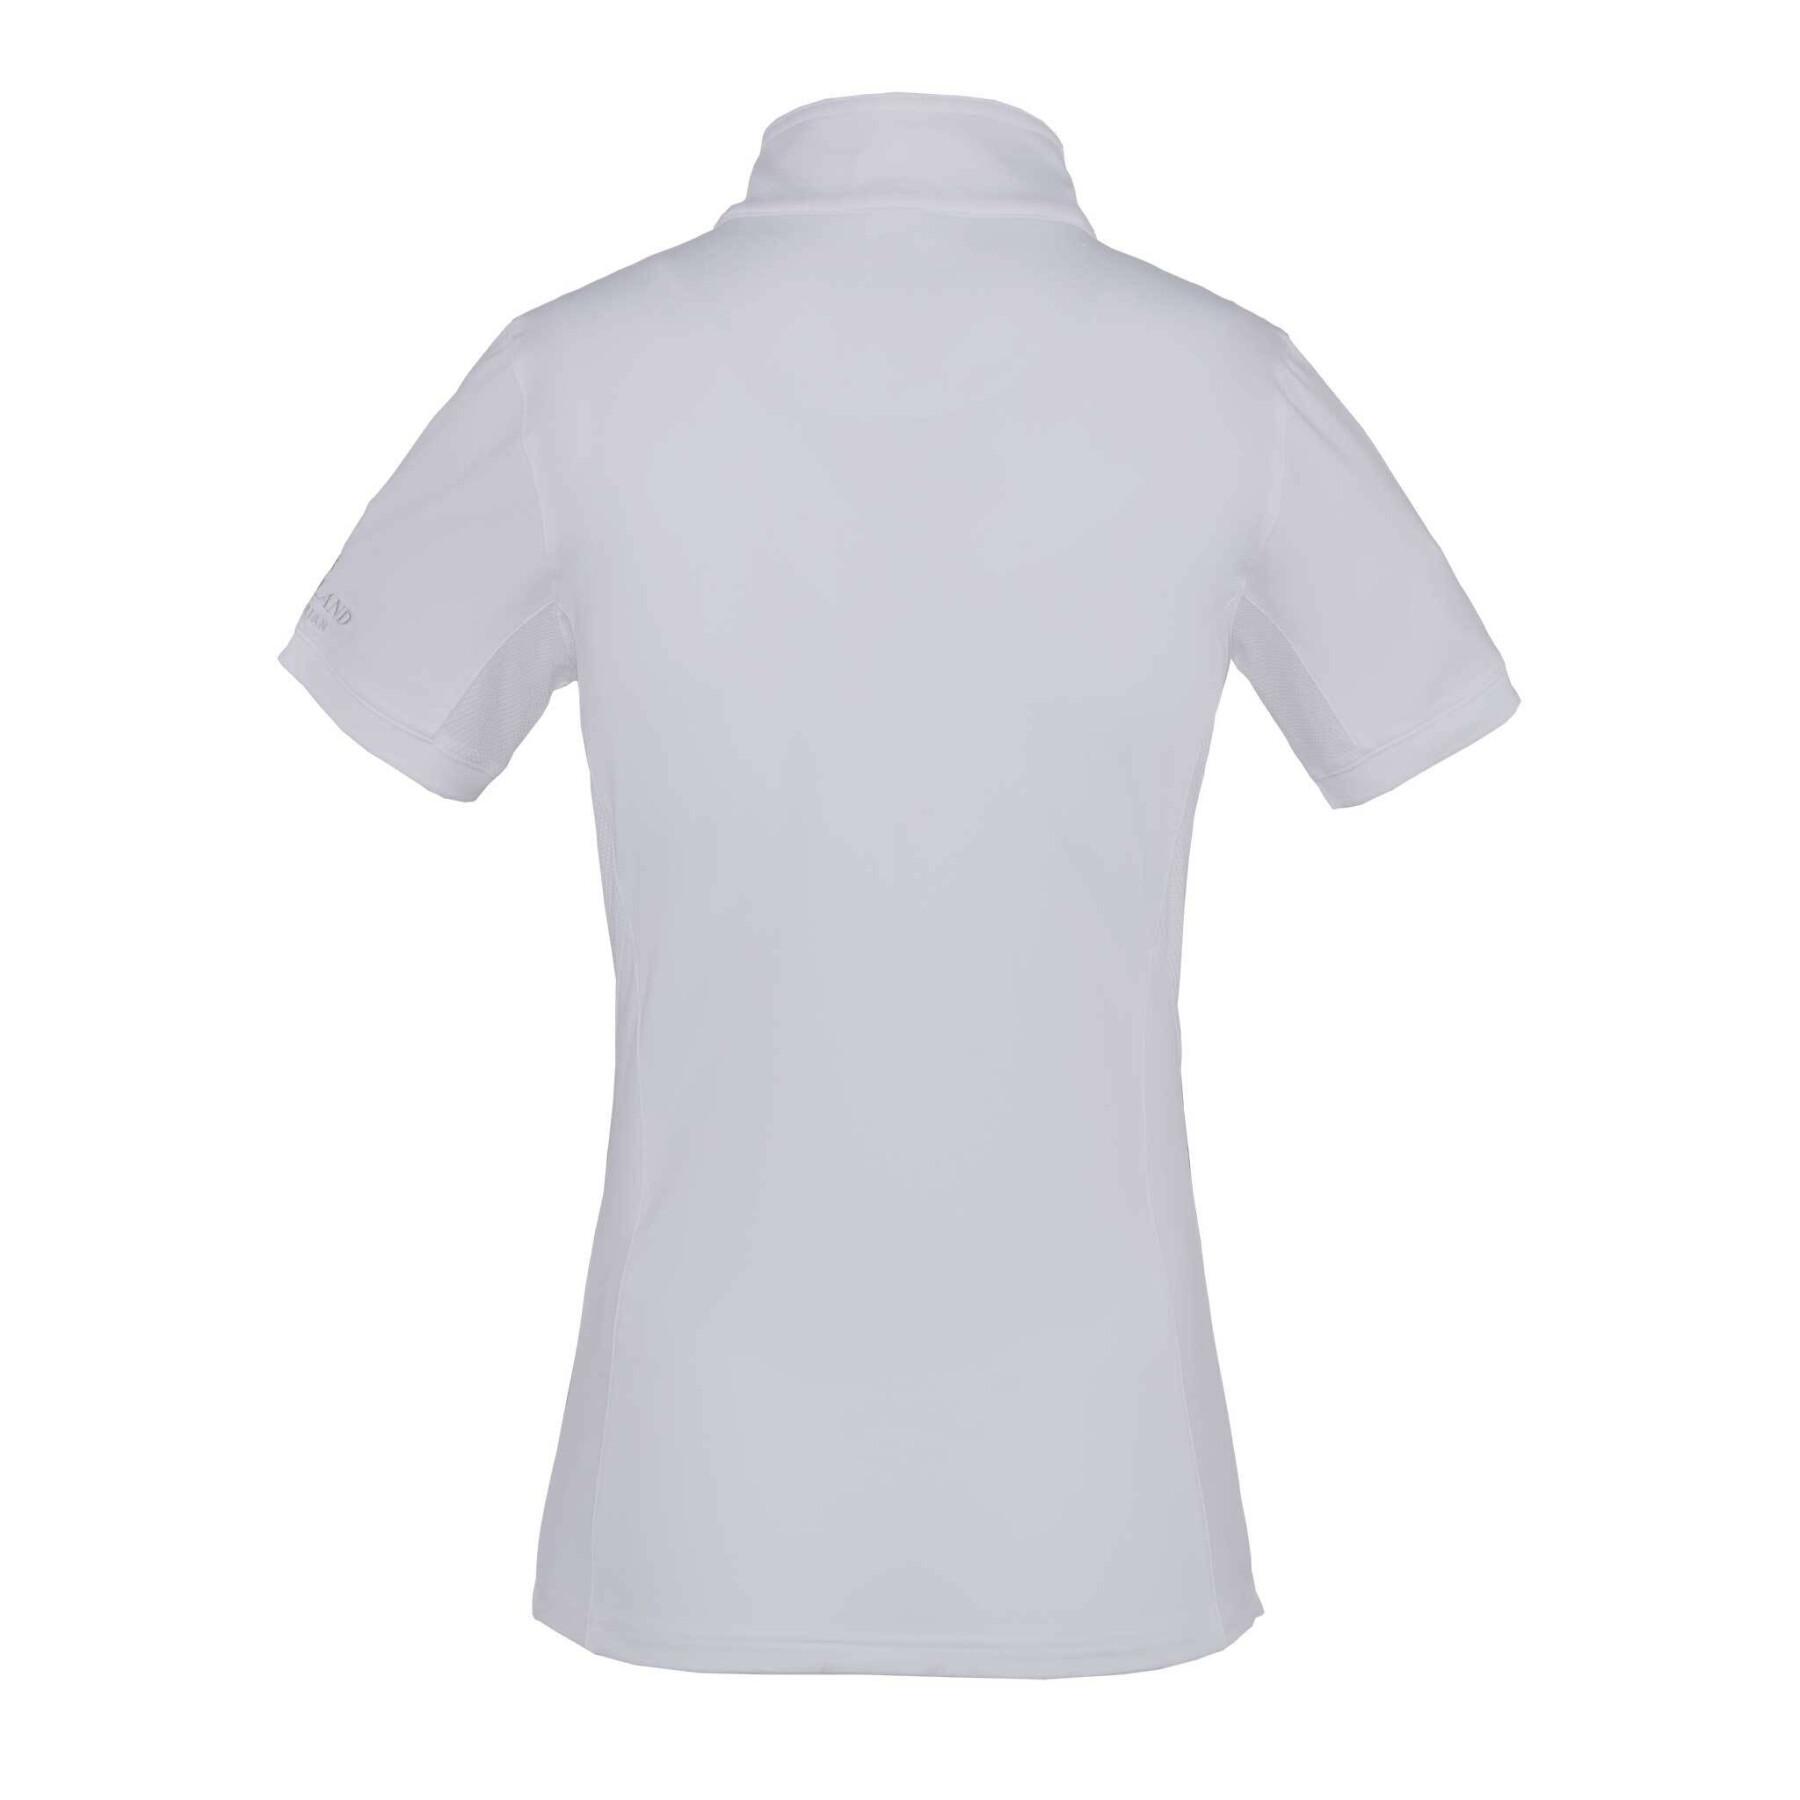 Women's short sleeve competition shirt Kingsland